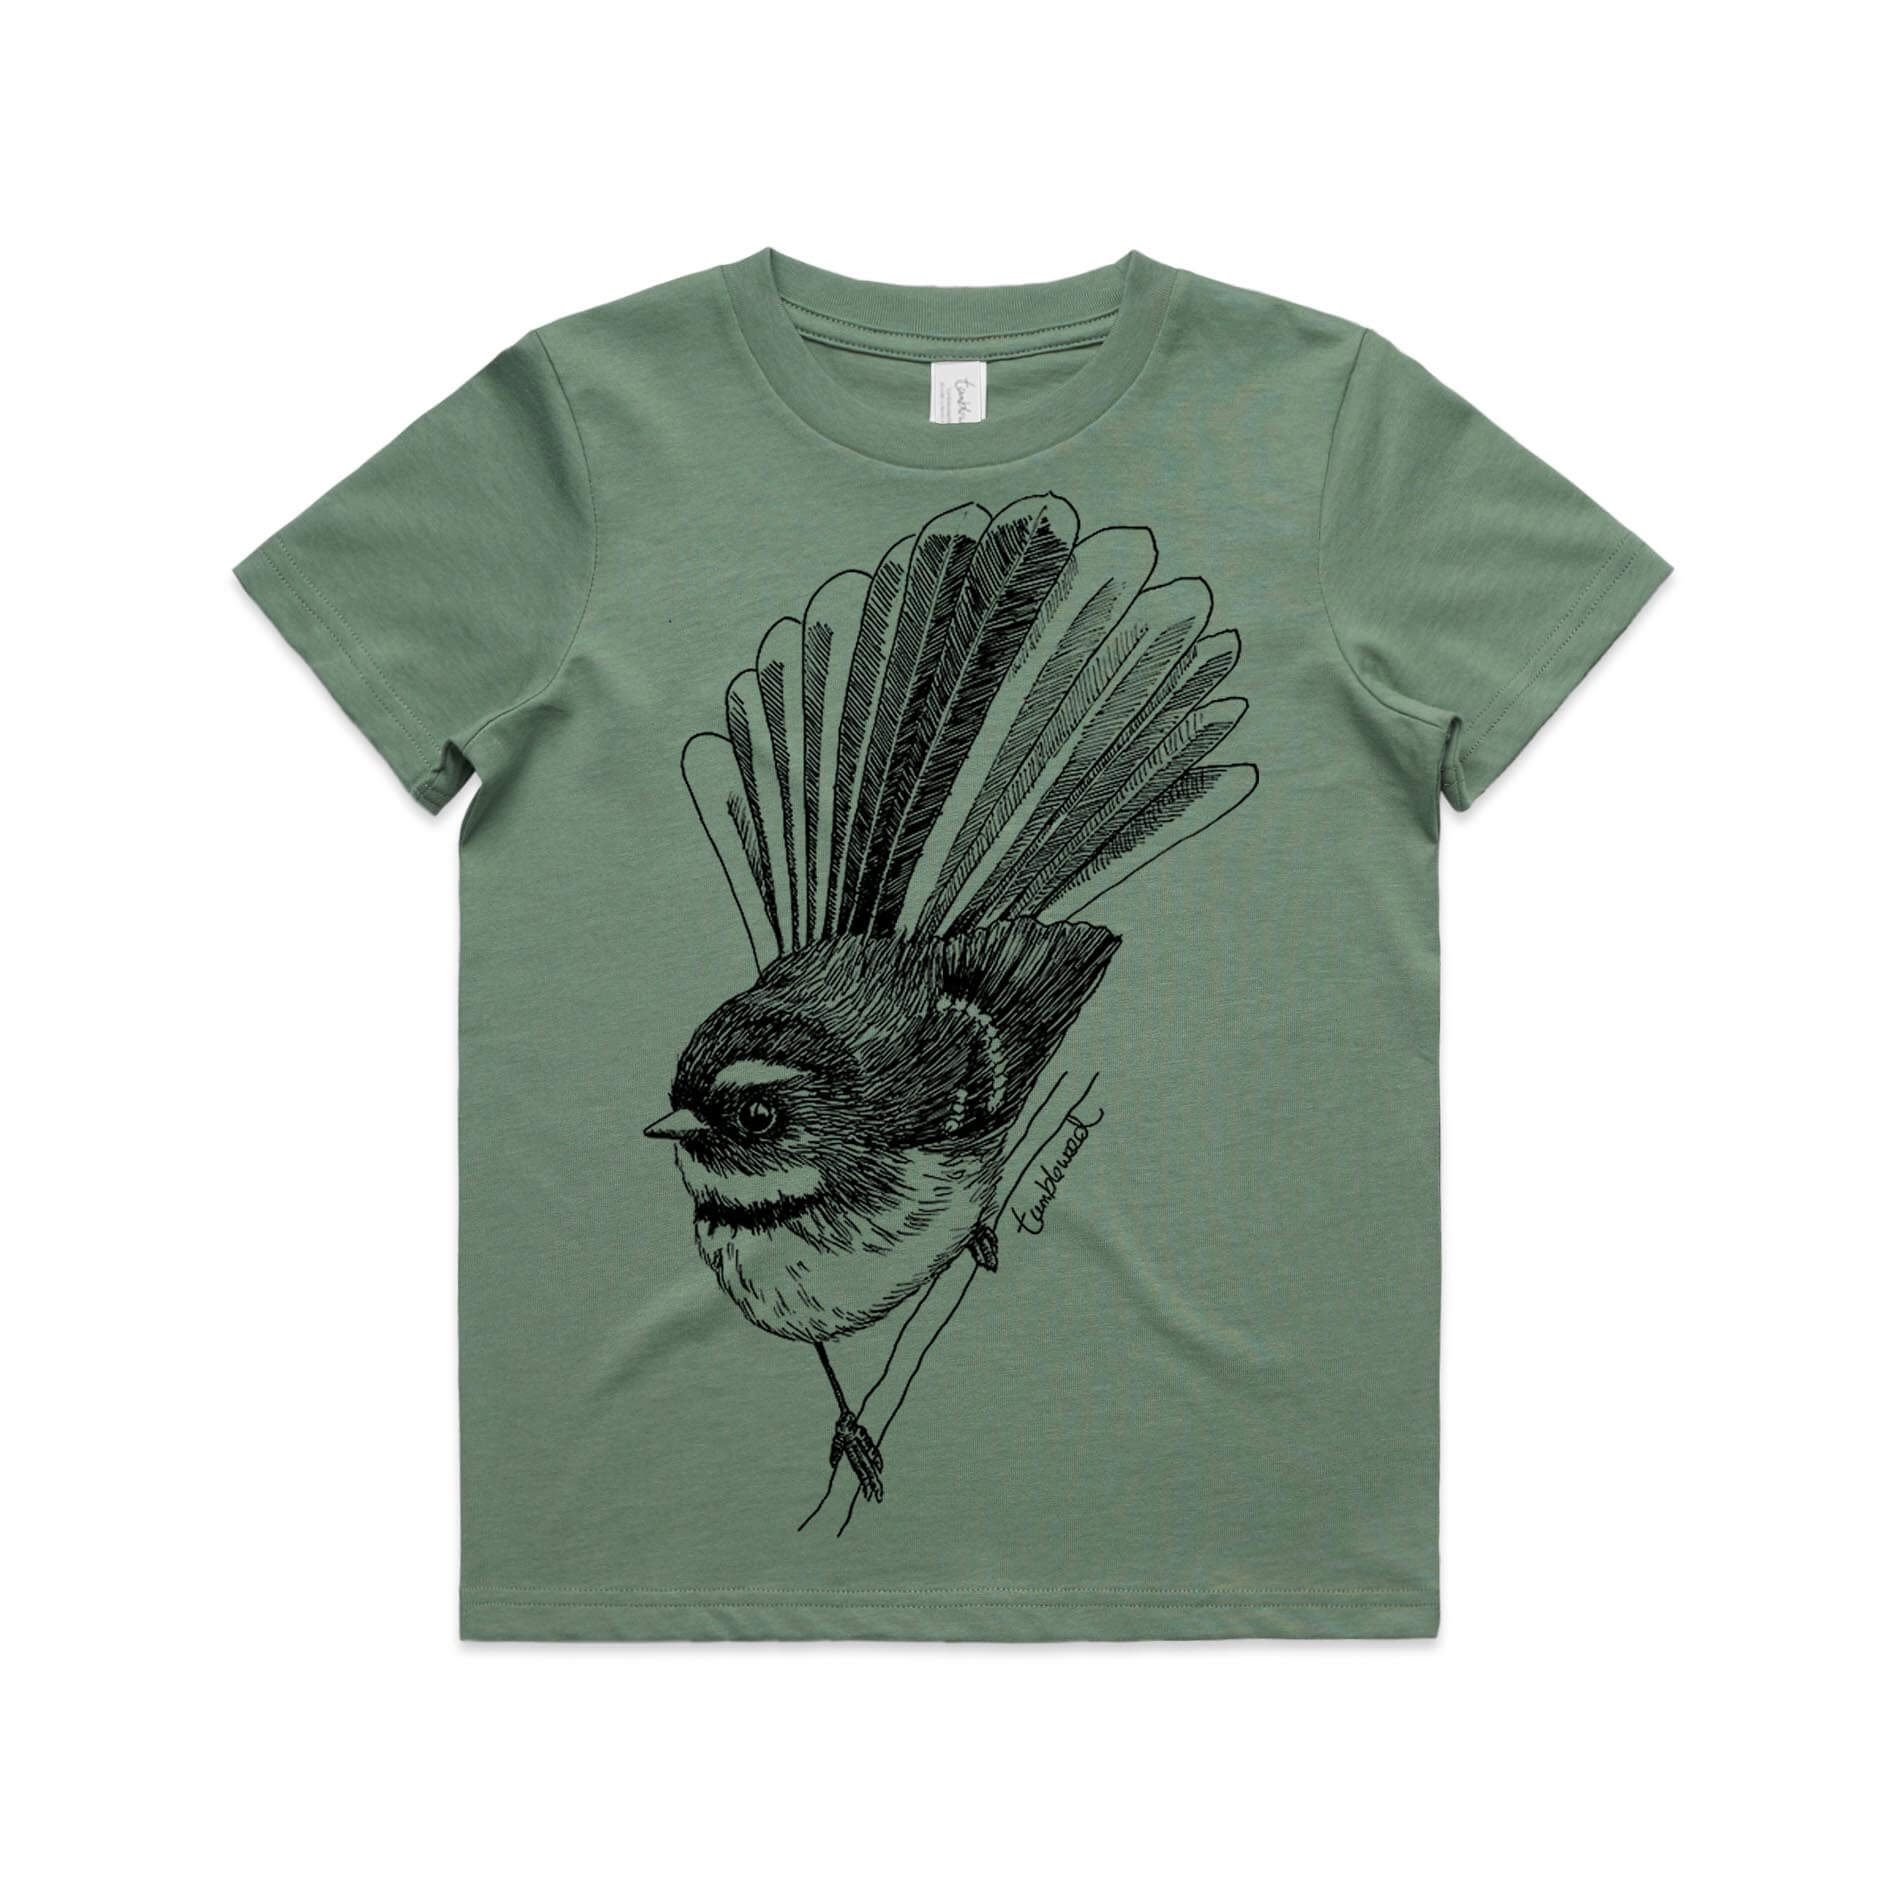 Sage, cotton kids' t-shirt with screen printed fantail/piwakawaka design.